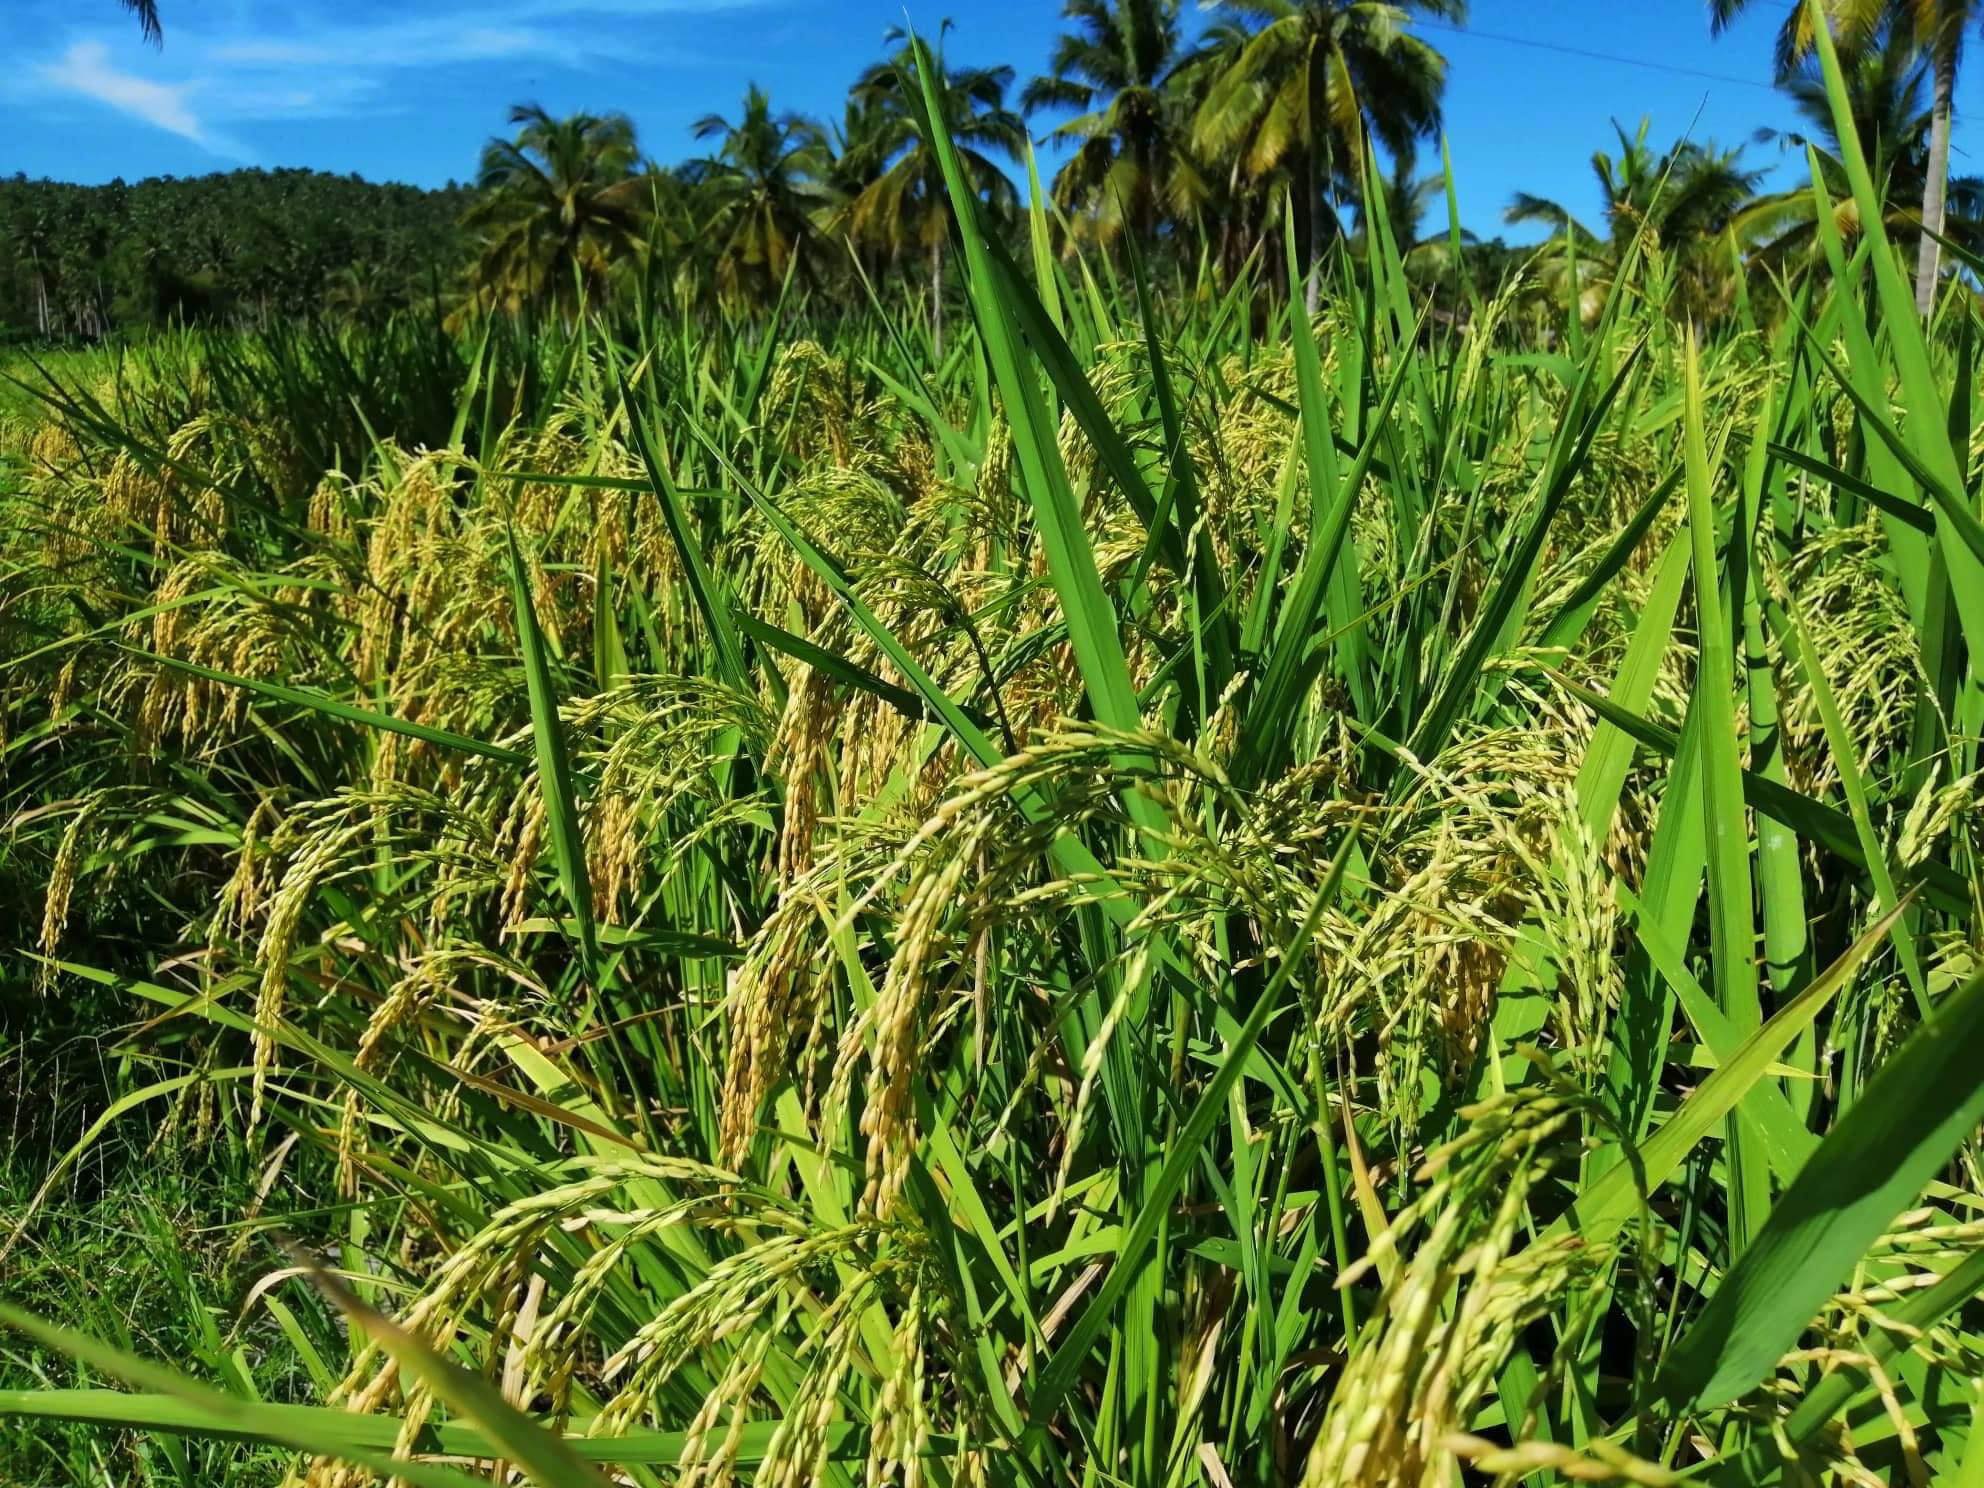 DA-4A promotes, boosts hybrid rice production thru community farming program